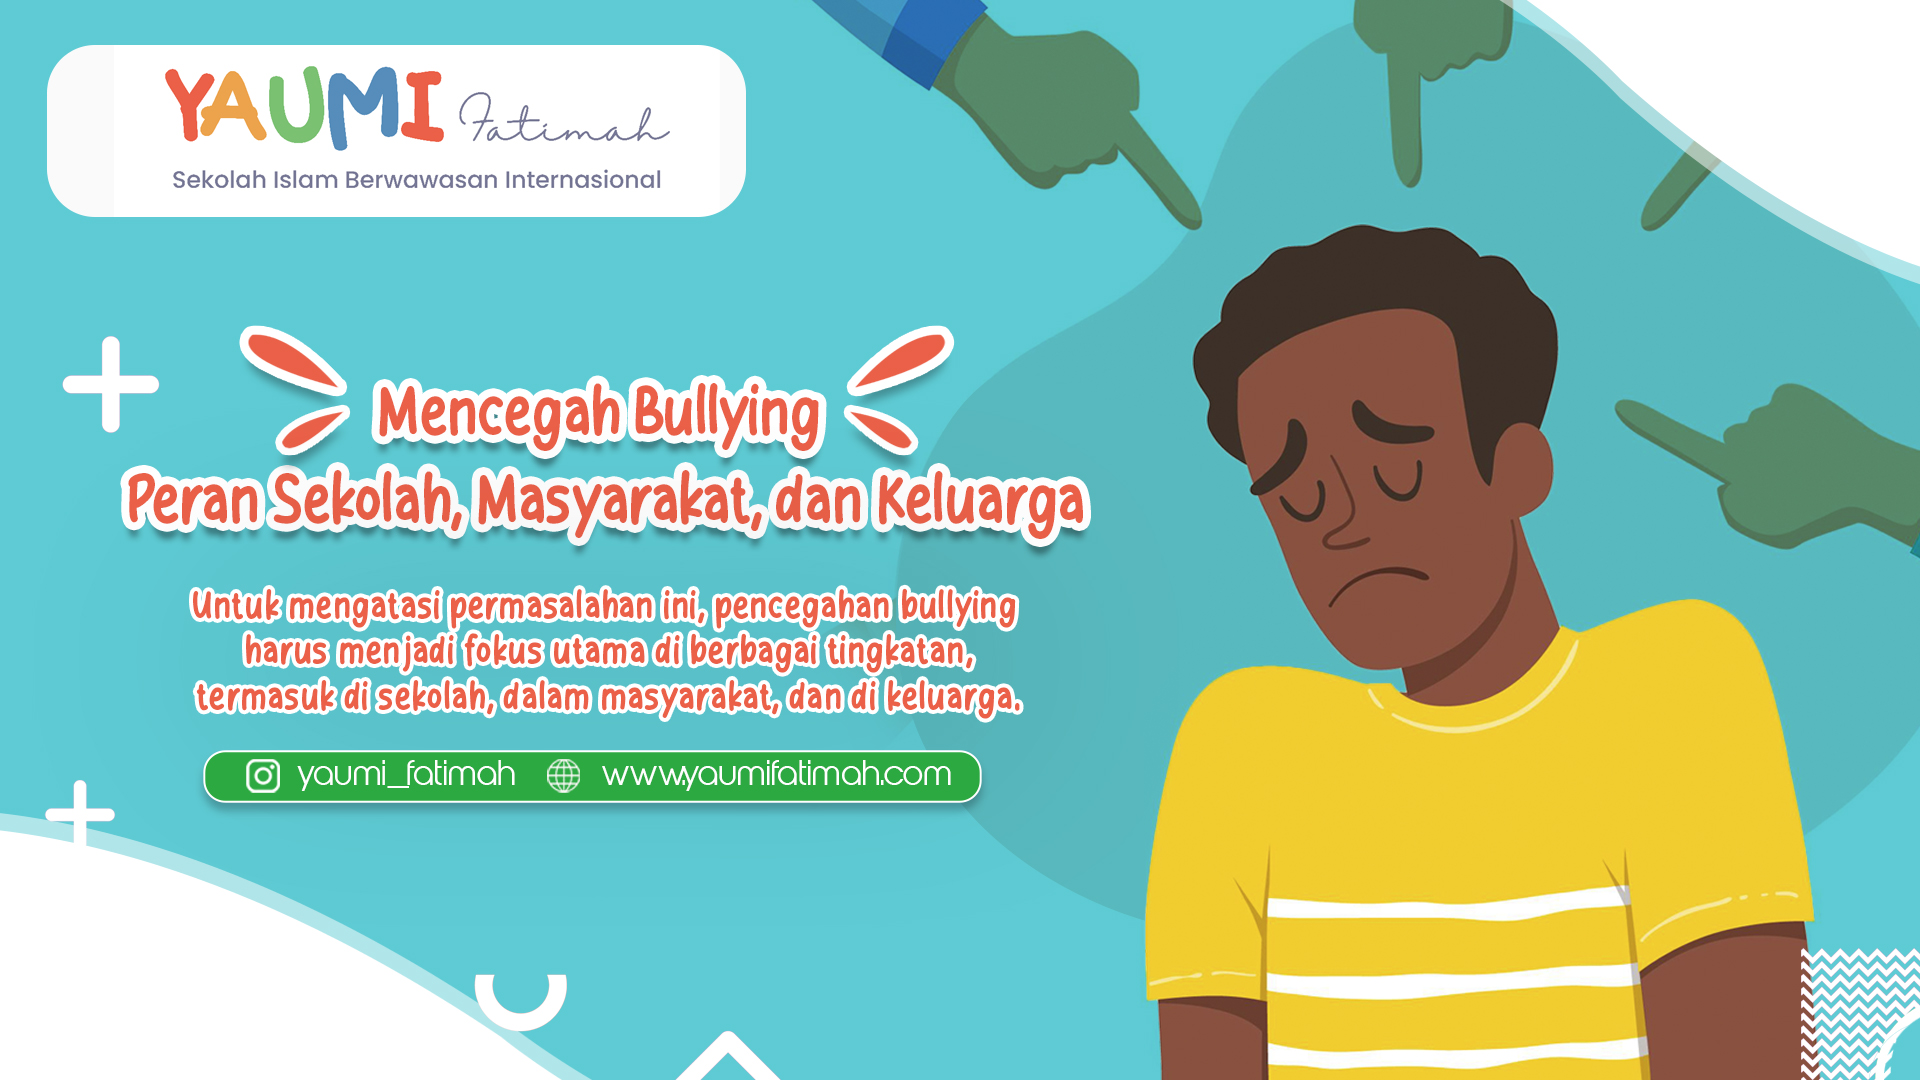 Mencegah bulliying